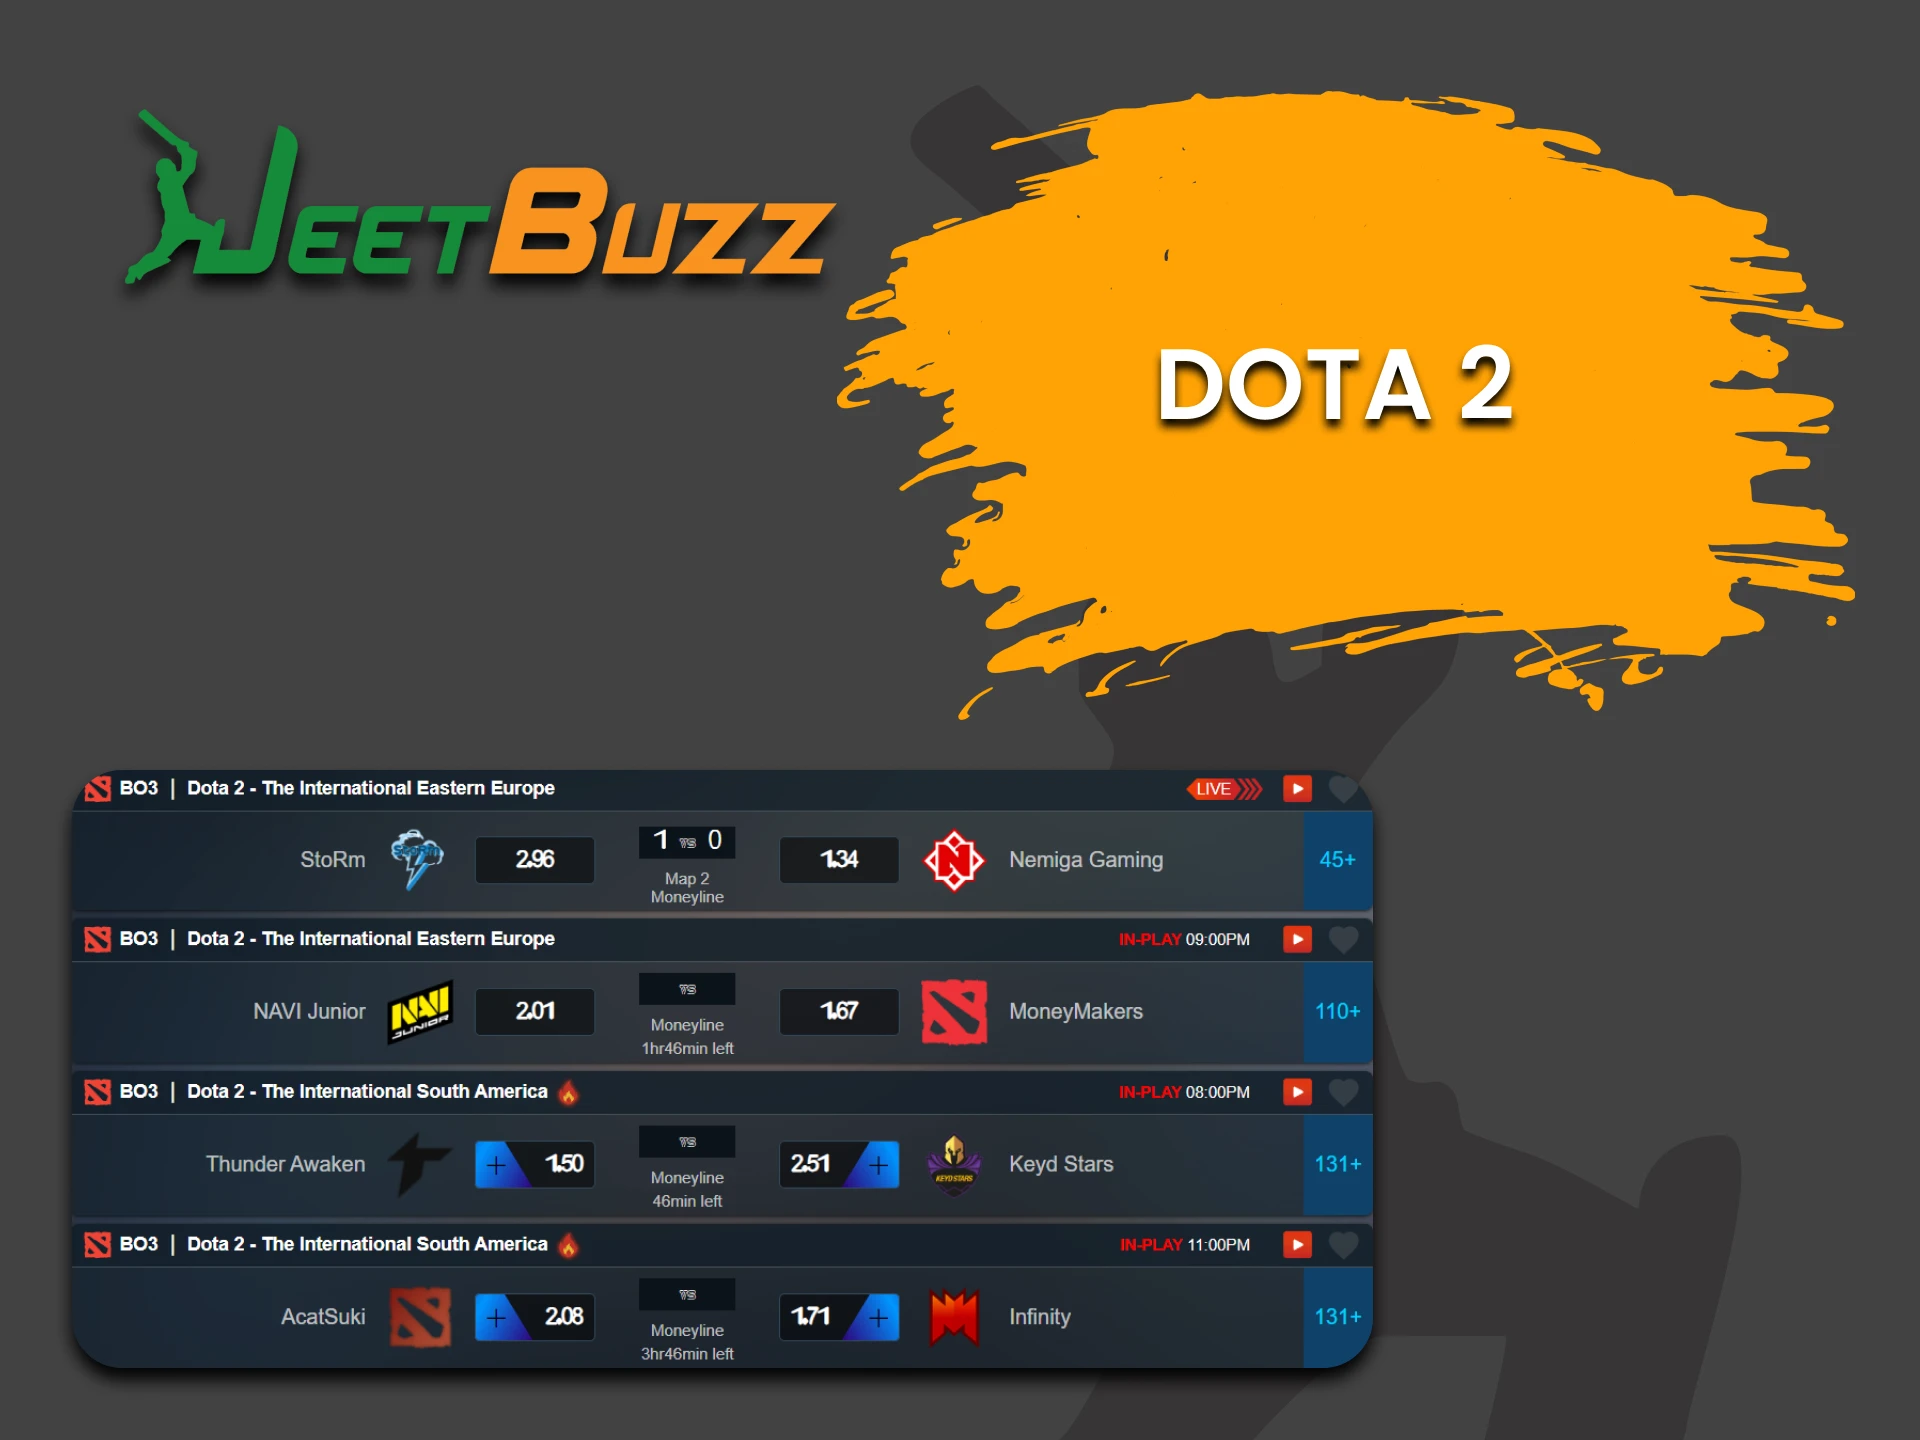 For JeetBuzz esports betting, choose Dota 2.